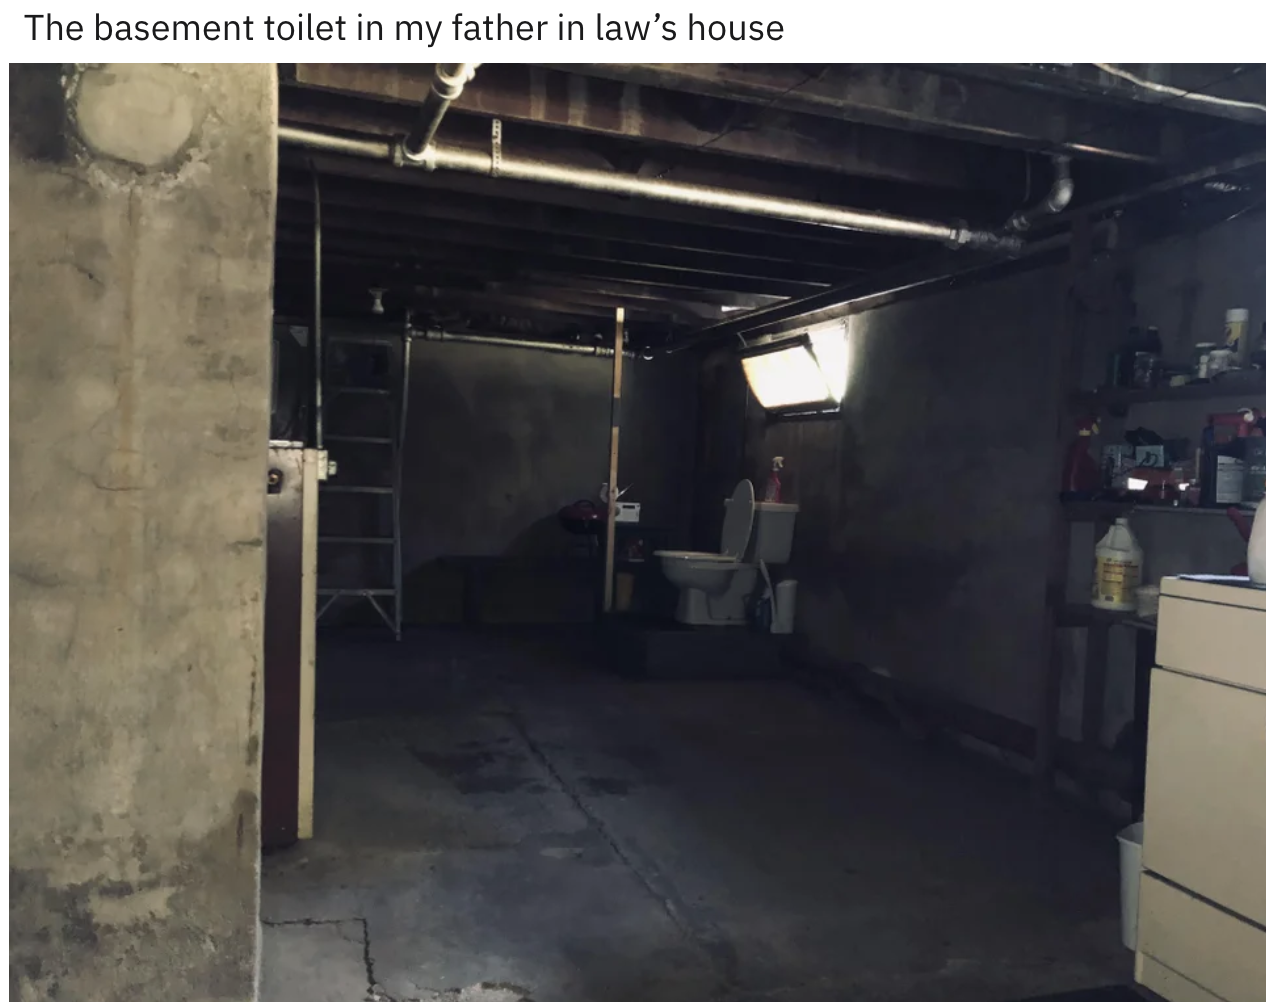 A toilet in a basement